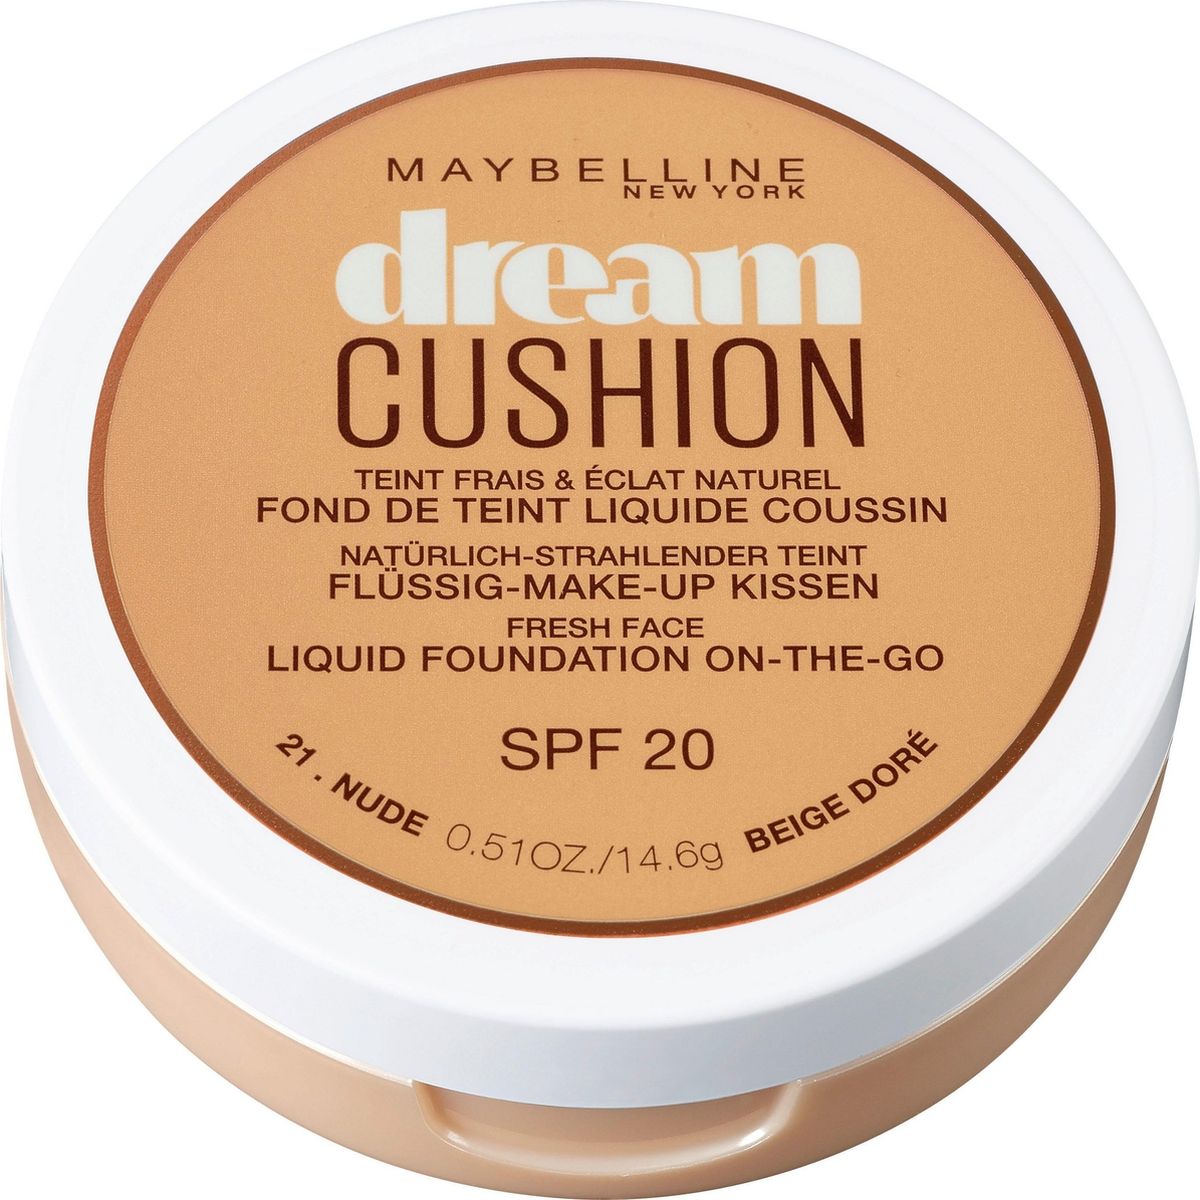 Maybelline New York Тональный крем-кушон для лица Dream Cushion, увлажняющий, оттенок 21 Nude, SPF 20, 14,6 г